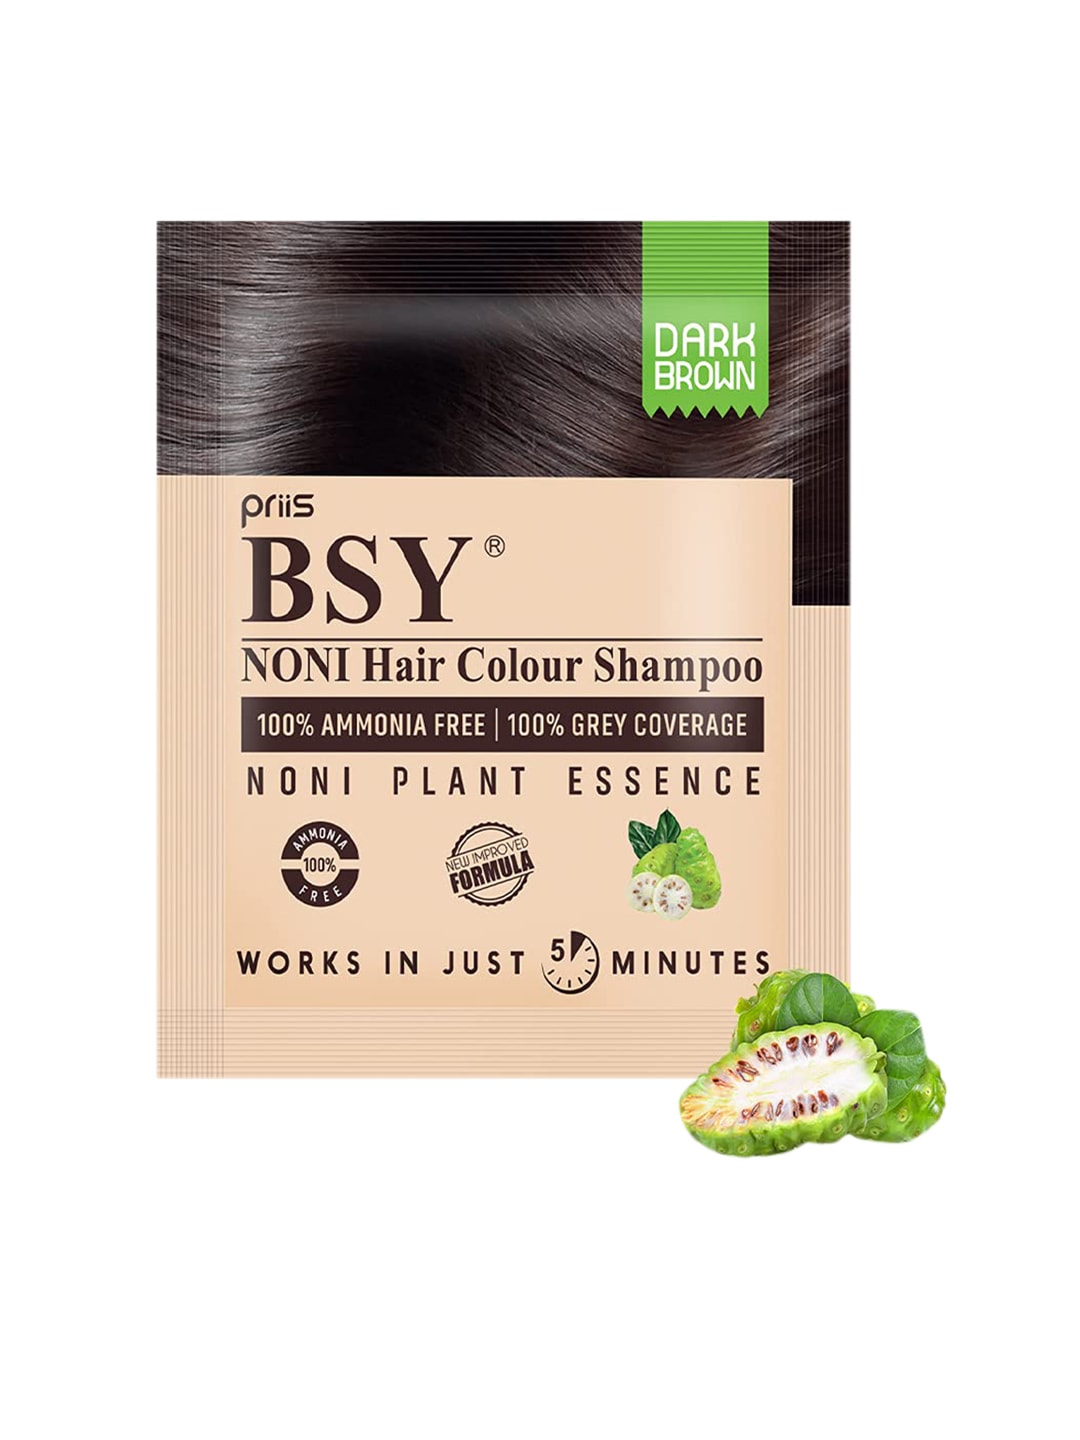 BSY Brown Noni Hair Colour Shampoo Price in India